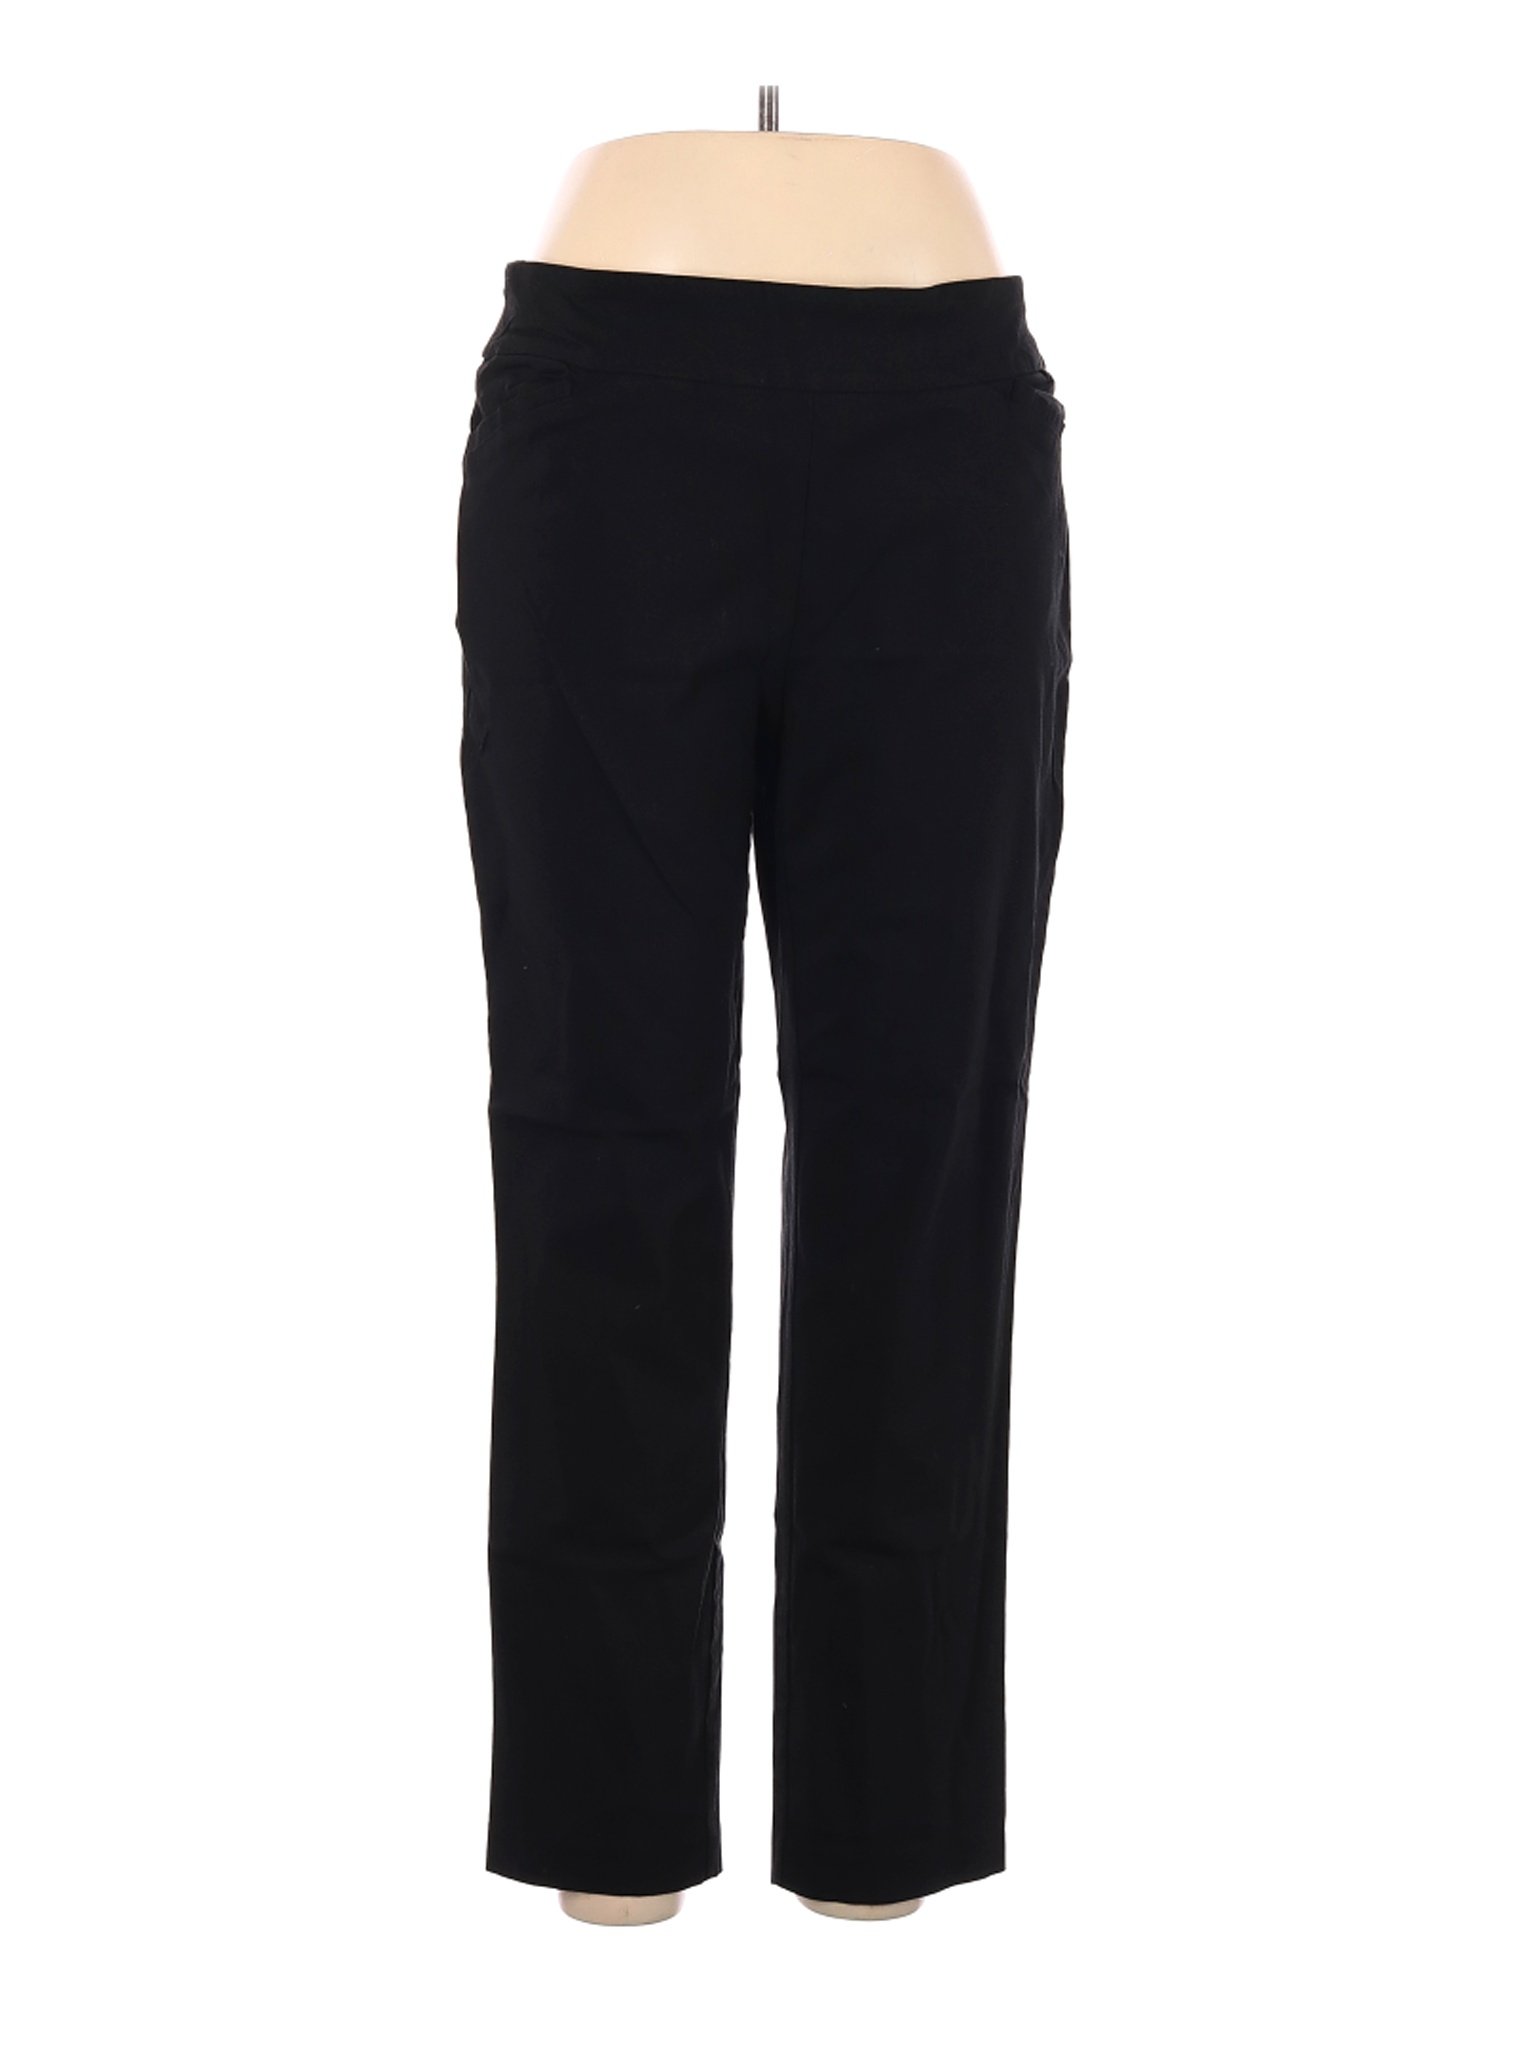 Terra & Sky Women Black Casual Pants 0X Plus | eBay